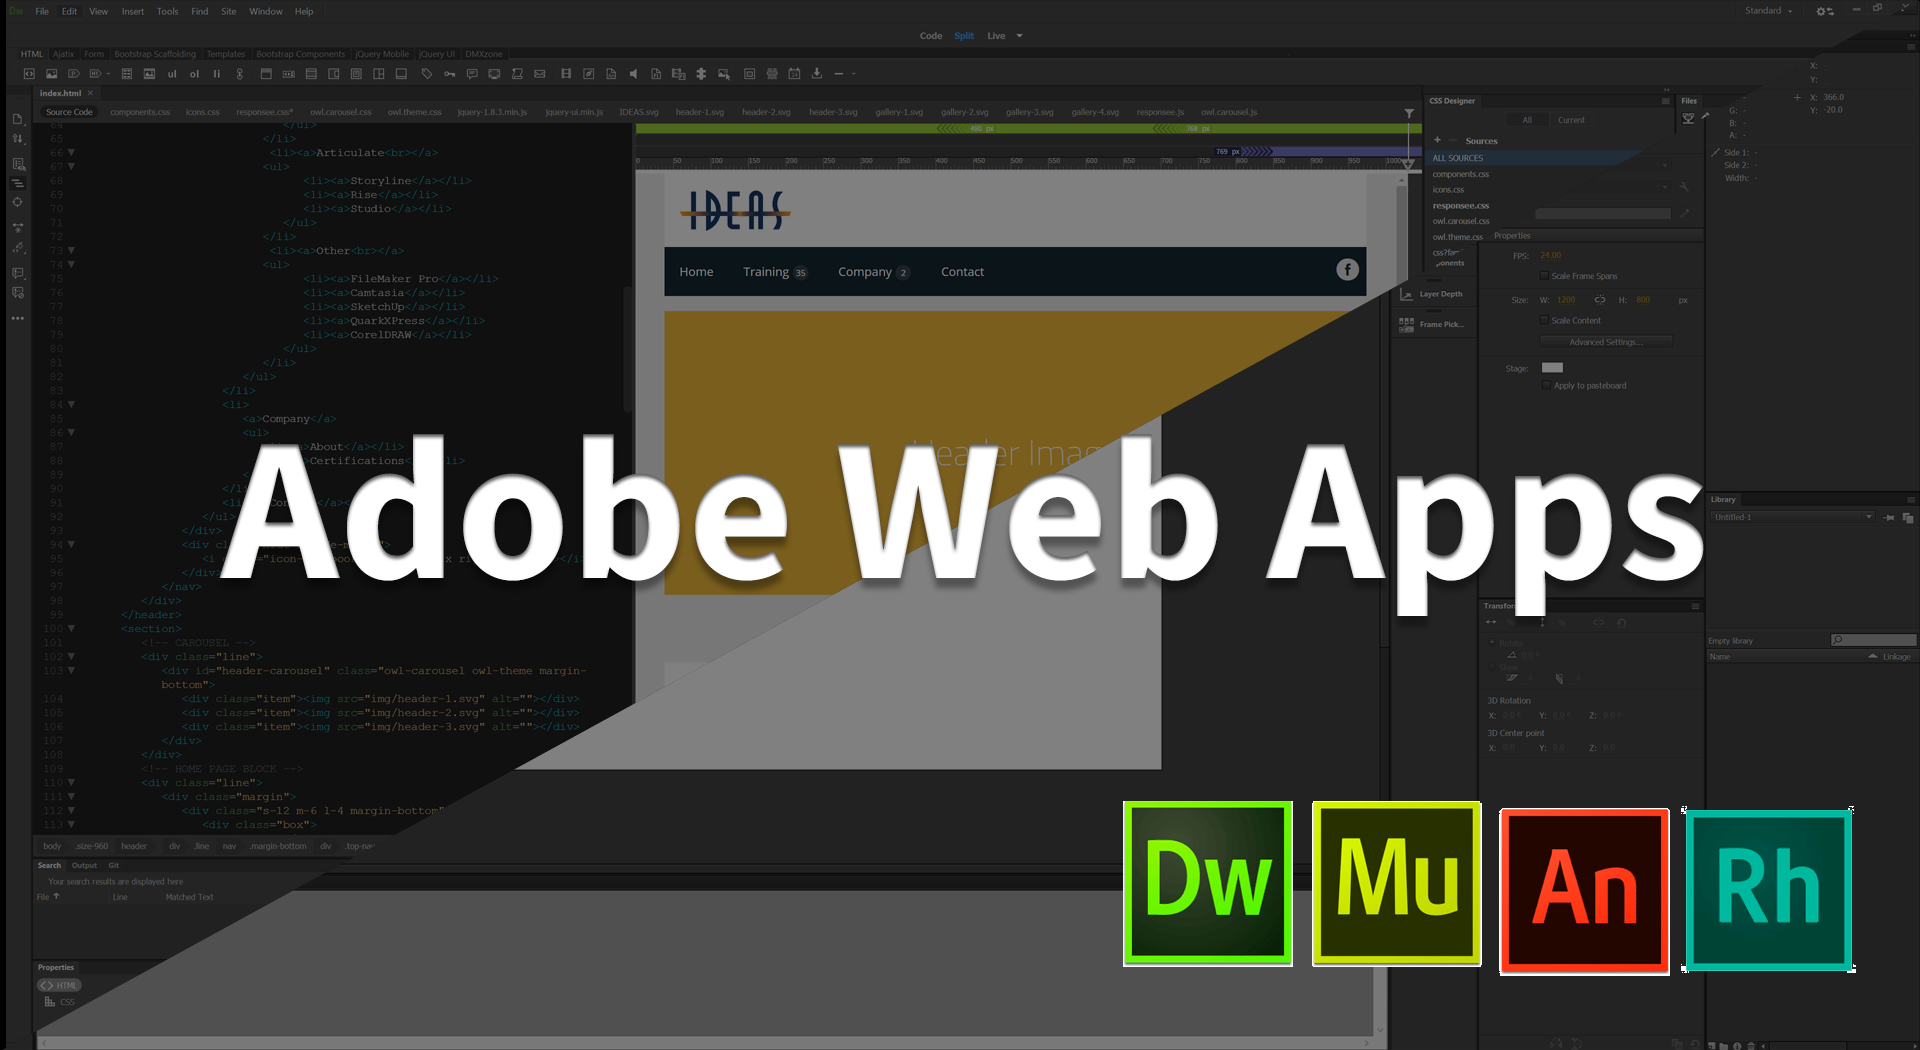 Adobe Web Apps